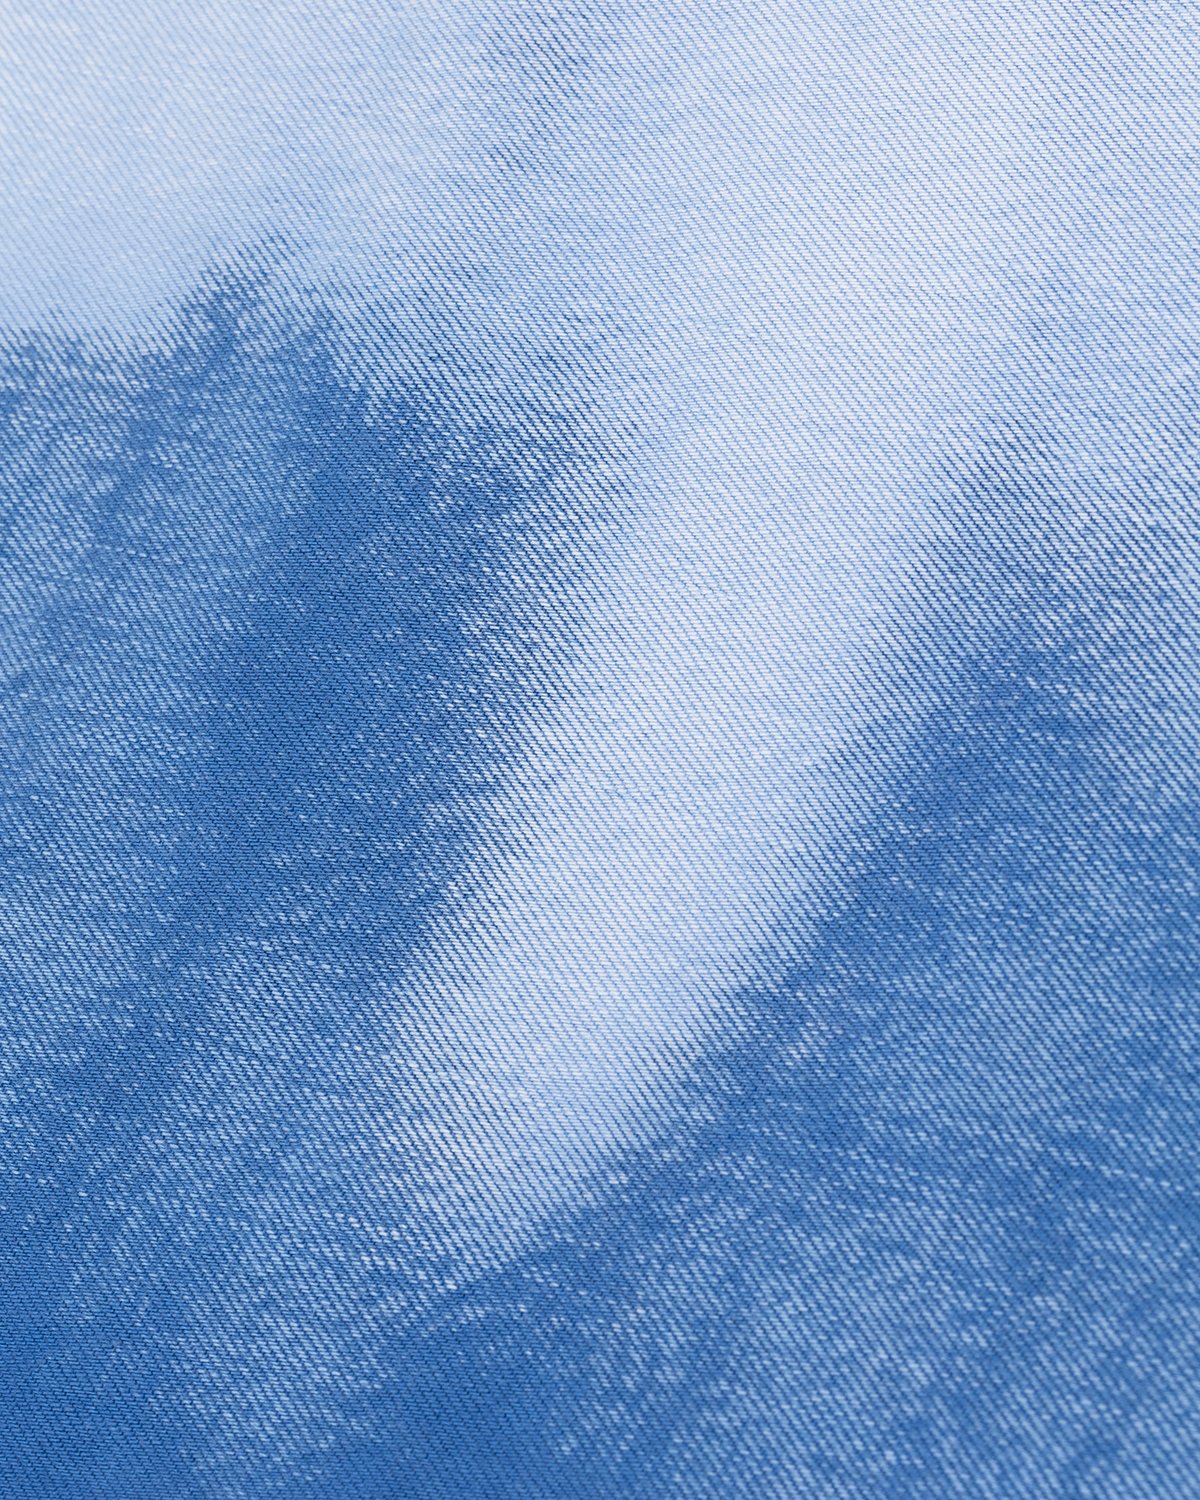 Acne Studios - Bleached Face Tote Bag Denim Blue - Accessories - Blue - Image 5